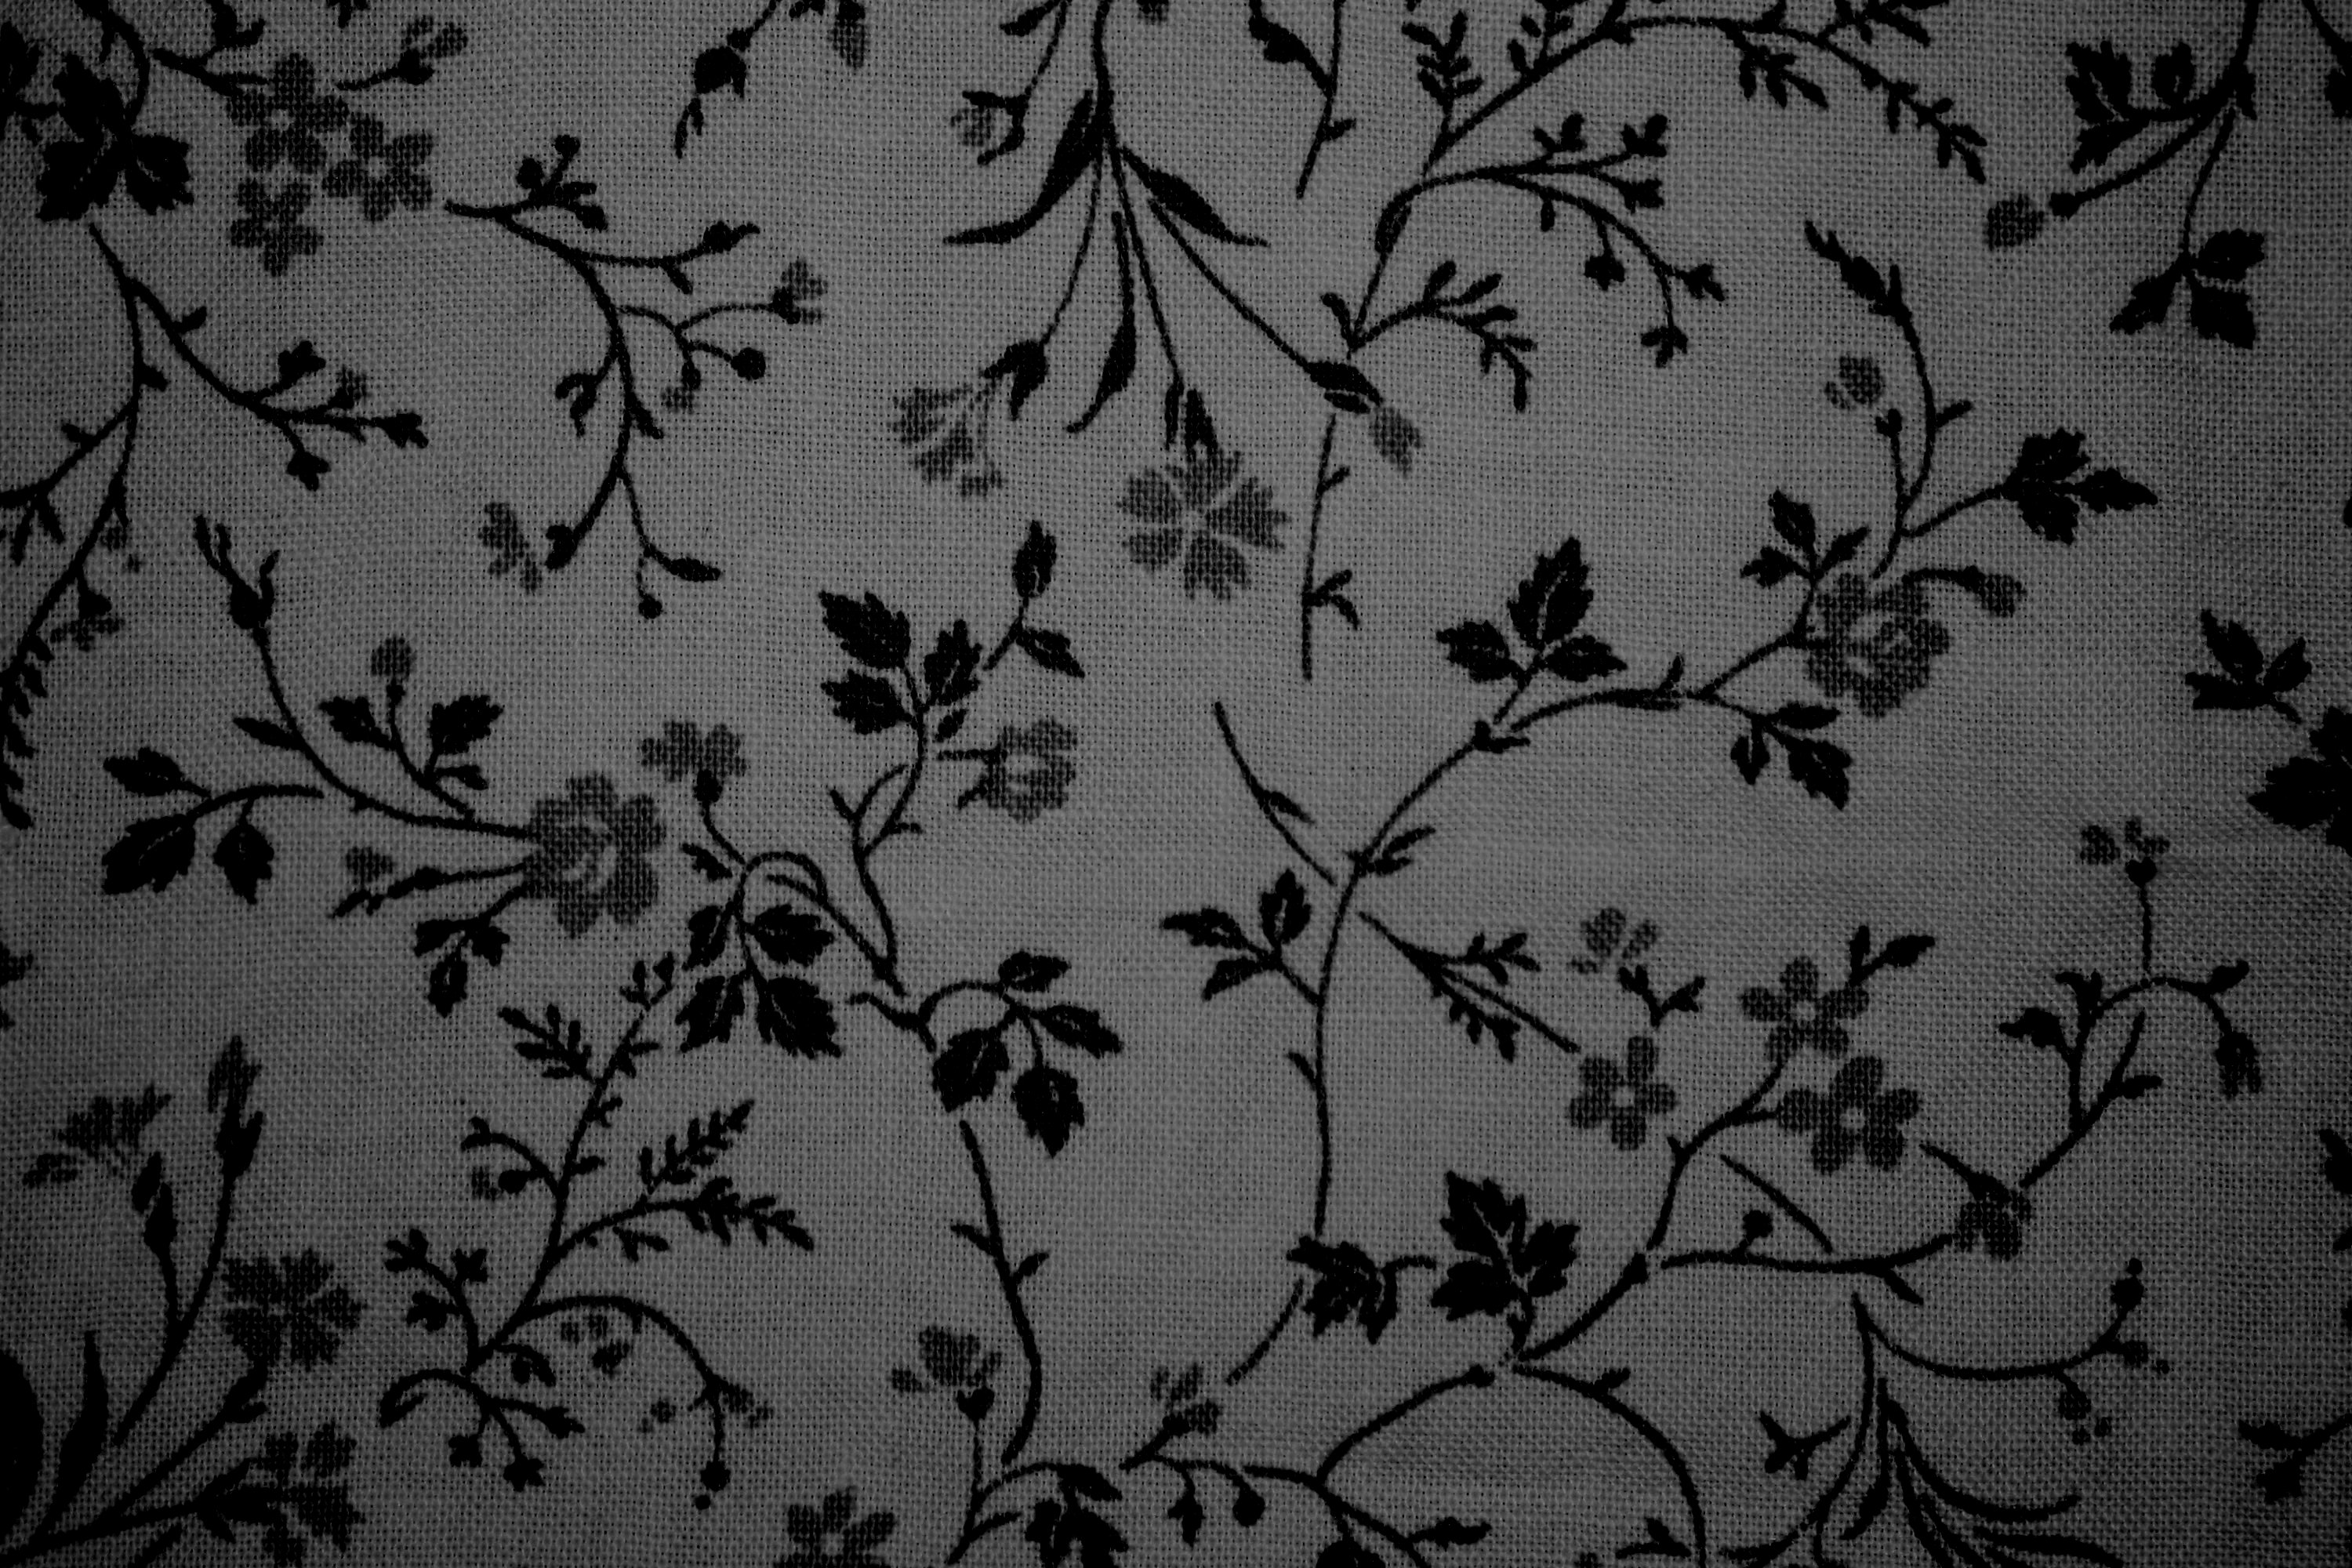 https://www.photos-public-domain.com/wp-content/uploads/2012/06/black-on-gray-floral-print-fabric-texture.jpg